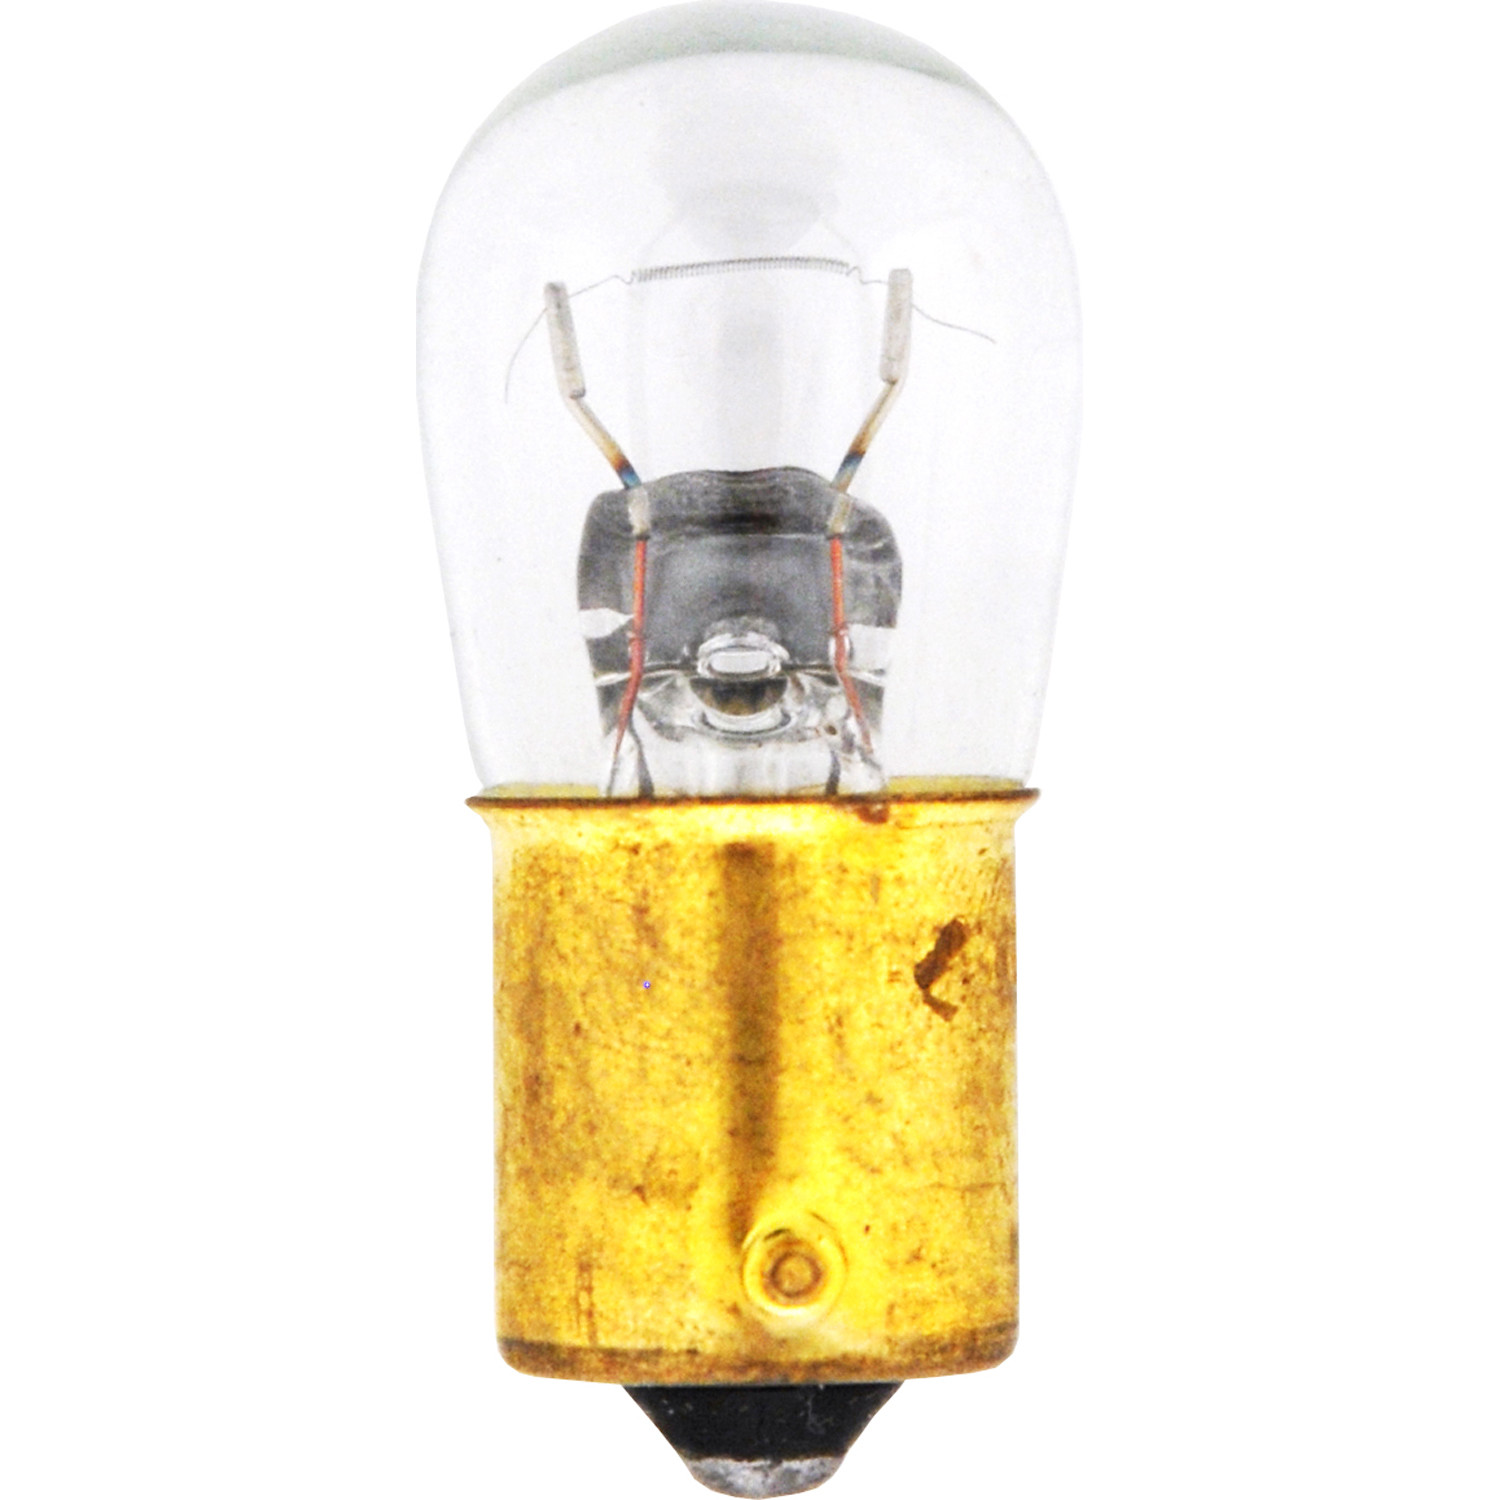 SYLVANIA RETAIL PACKS - Blister Pack Twin Dome Light Bulb - SYR 1004.BP2